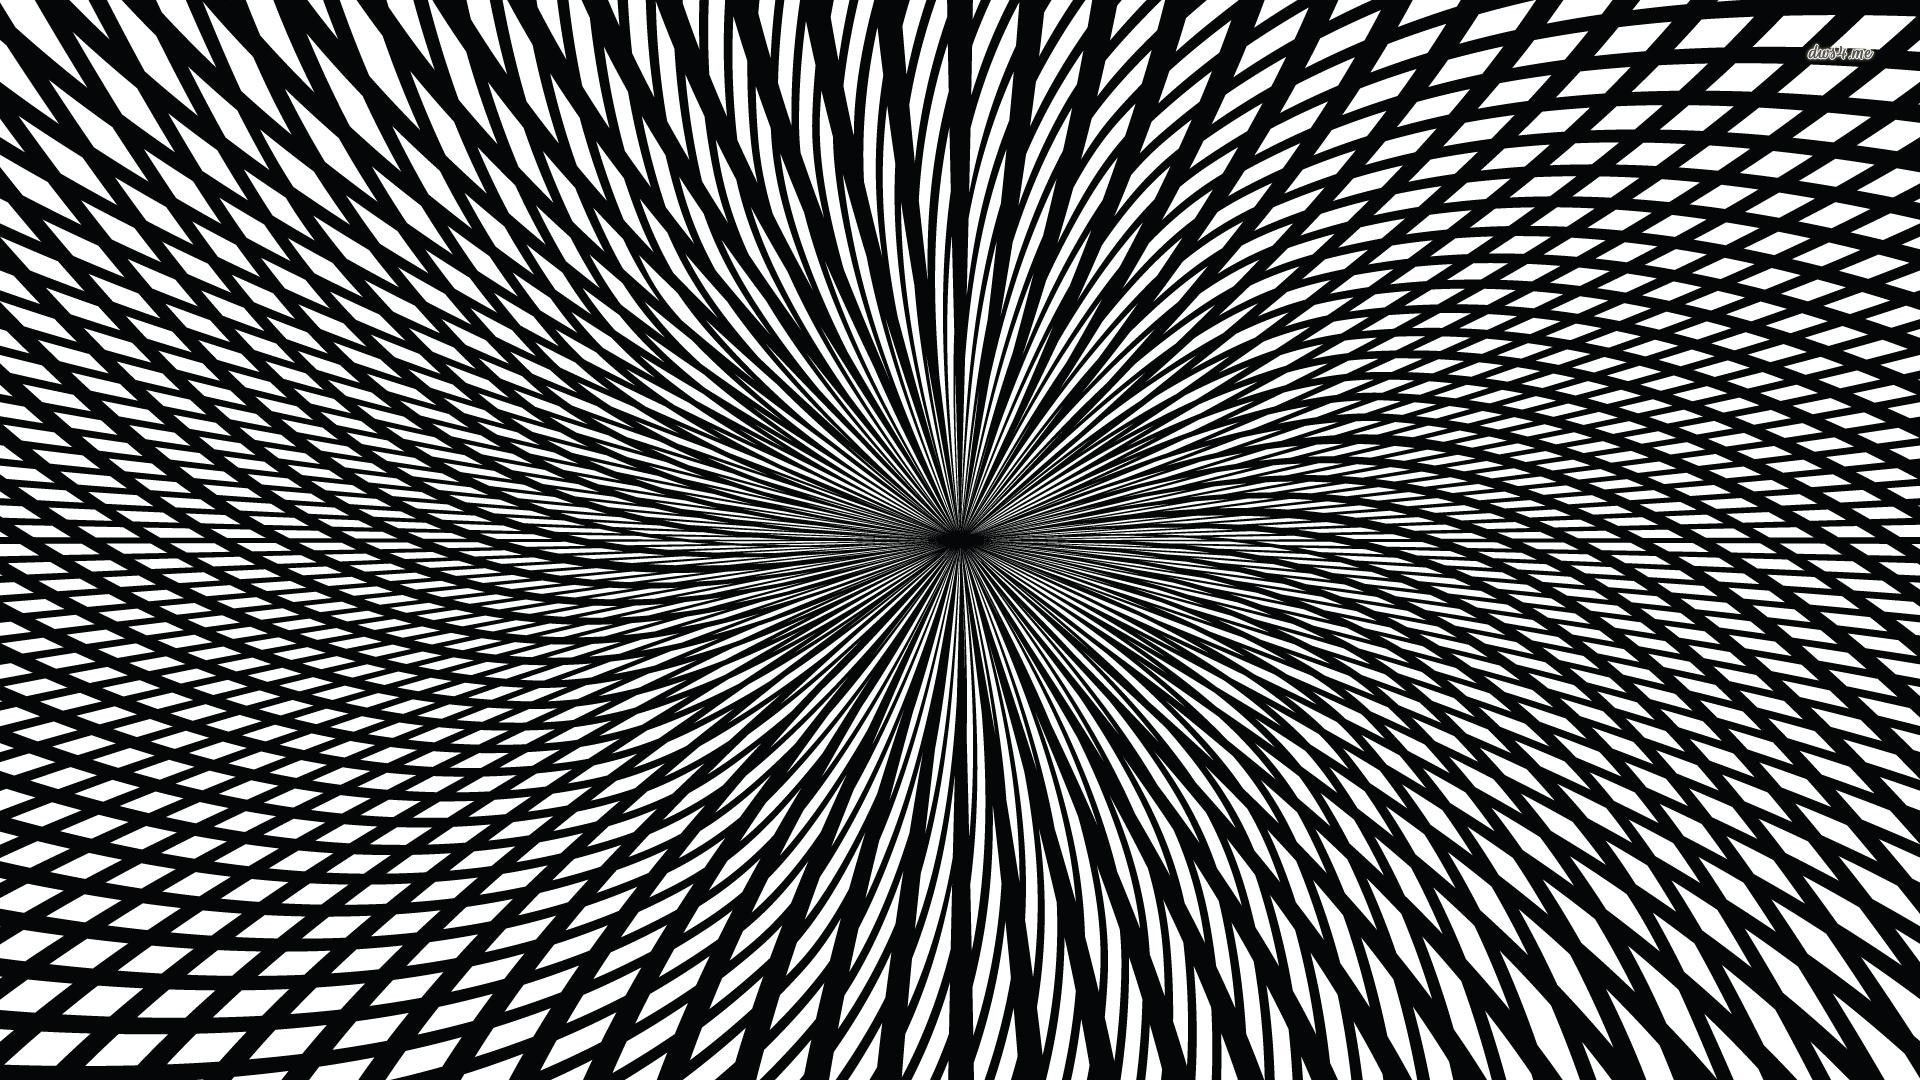 1920x1080 Optical illusion HD wallpaper | Optical illusion wallpaper, Abstract wallpaper backgrounds, Illusions